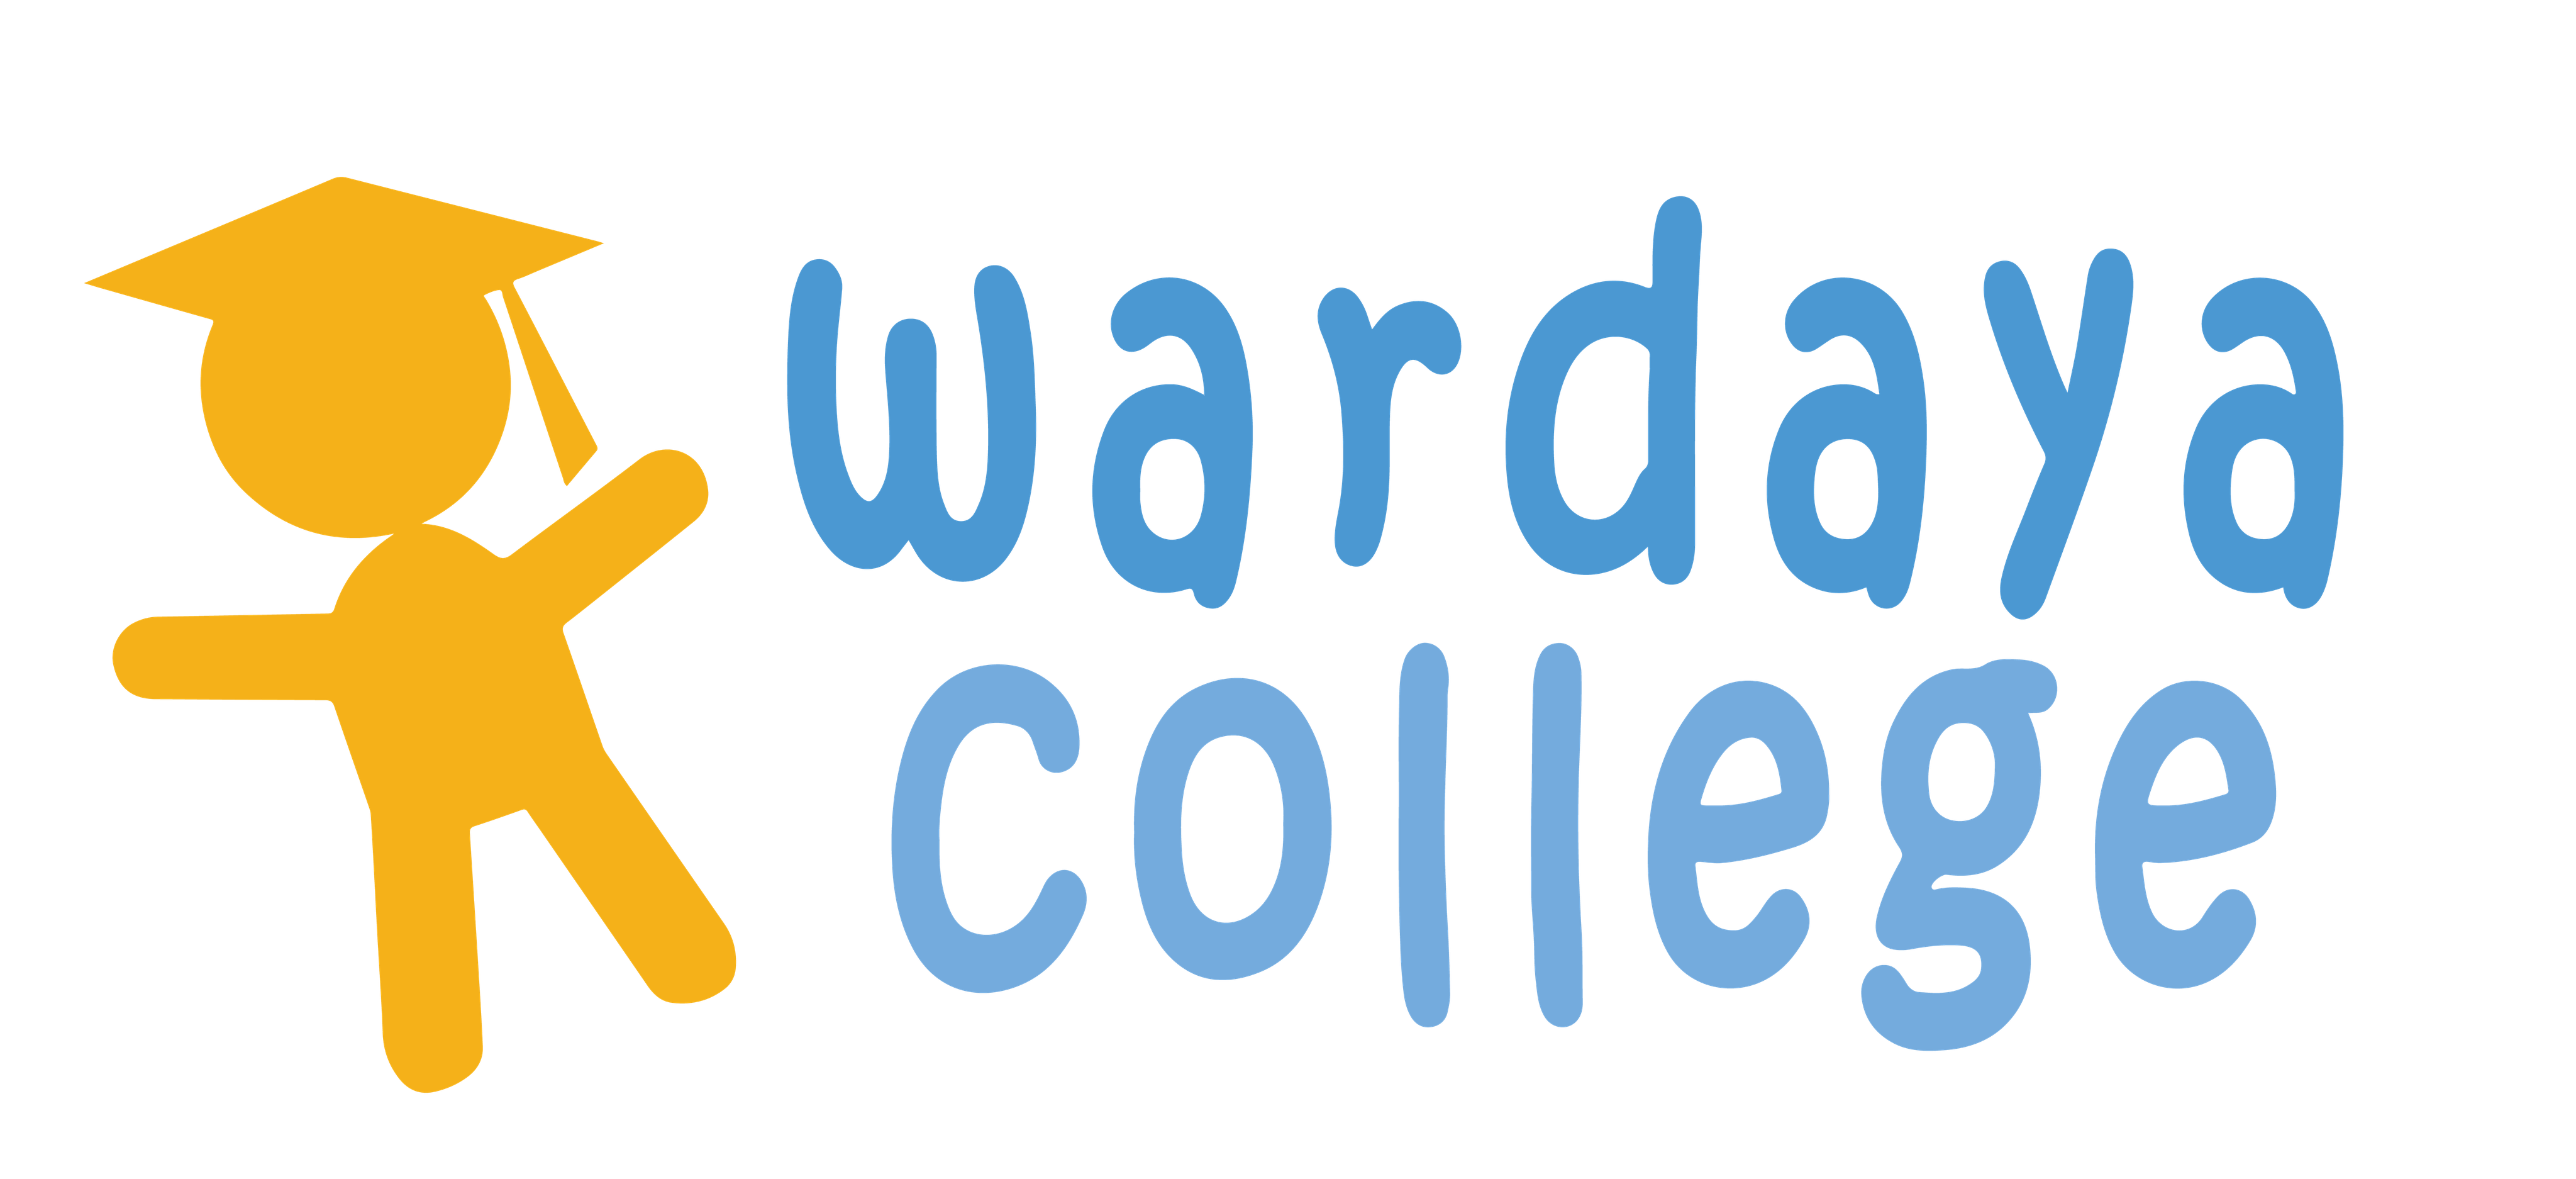 Wardaya College